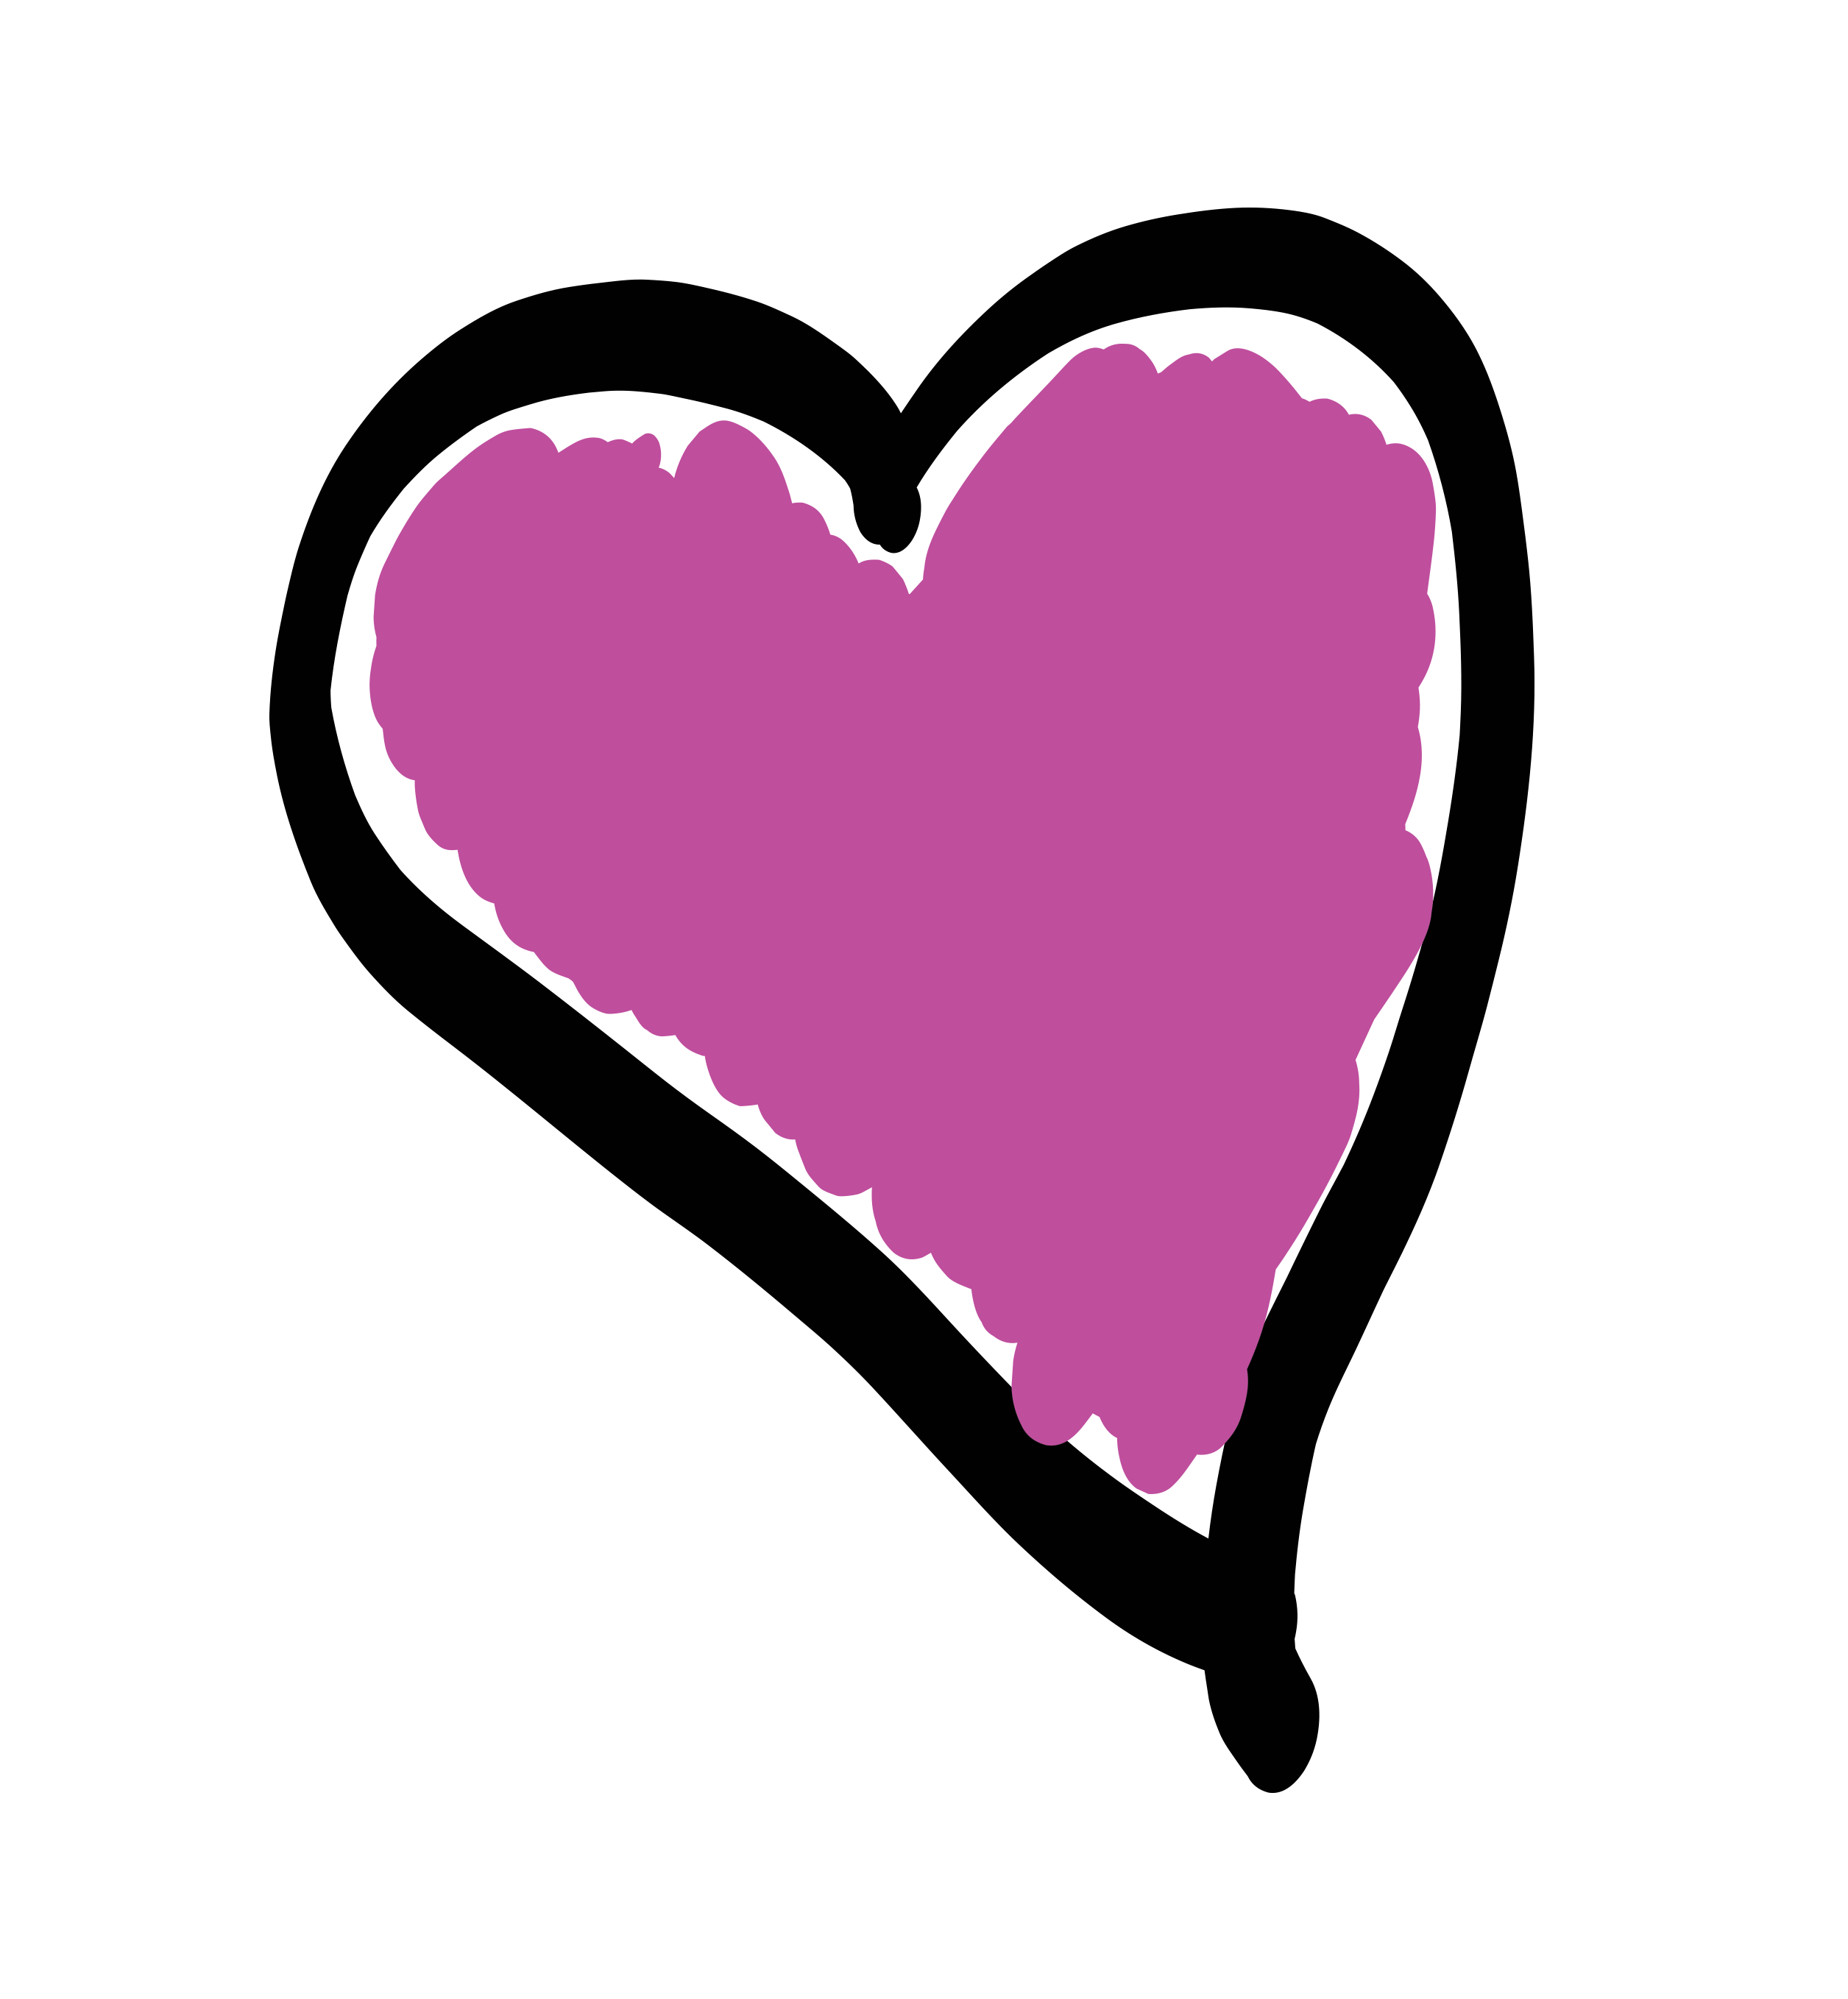 Don't Tell Toronto logo – a hand drawn heart, fuchsia coloured